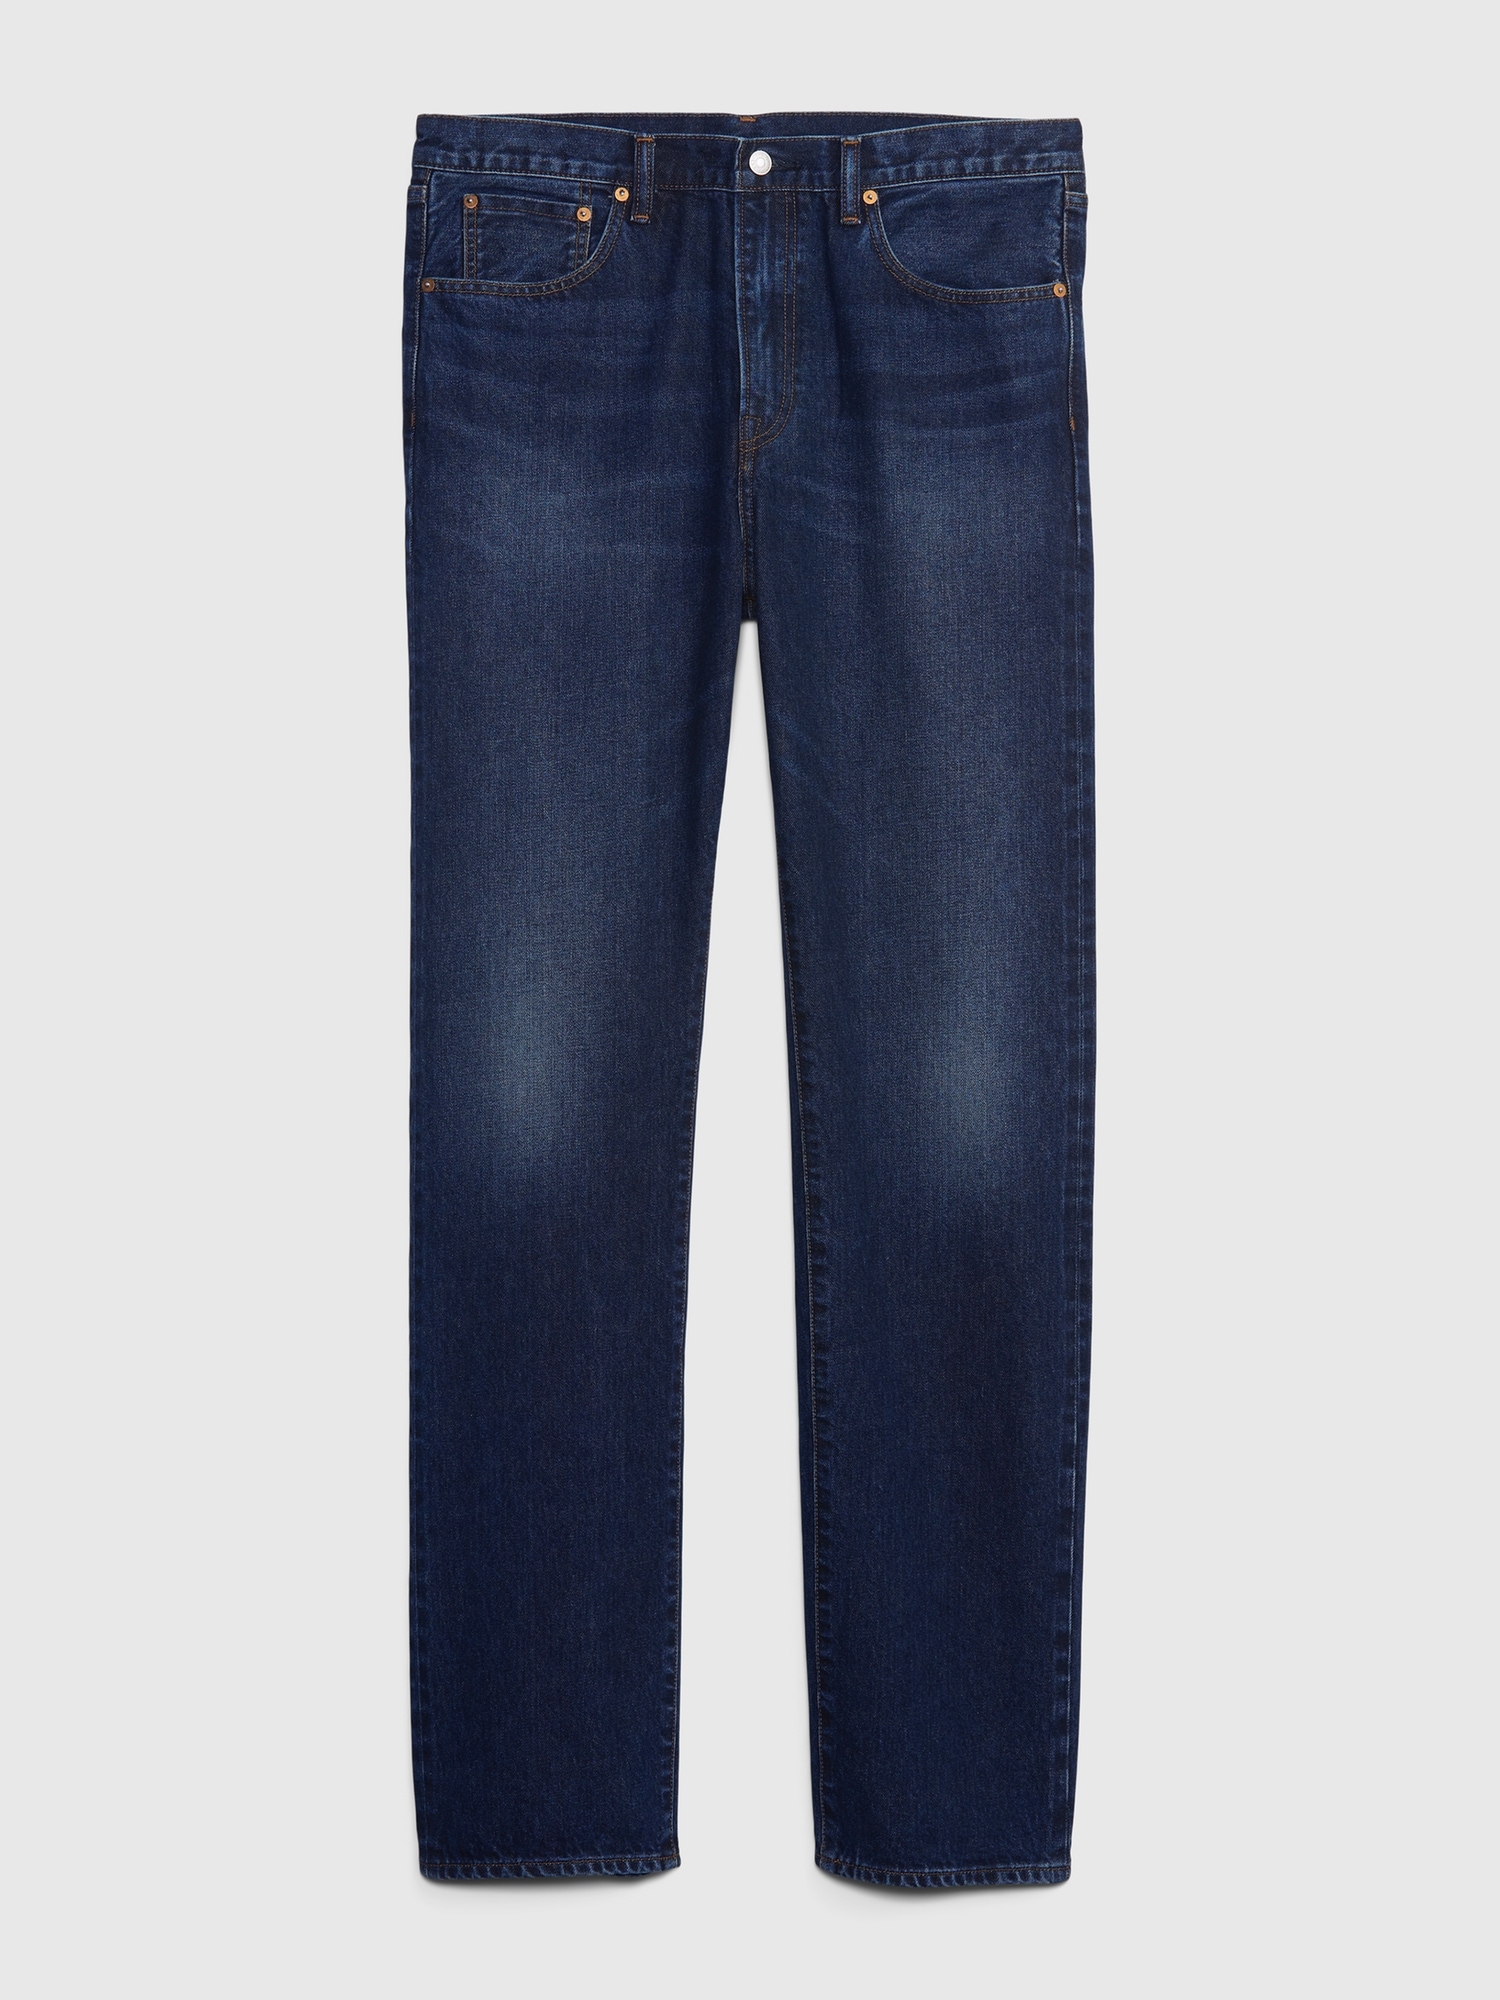 '90s Original Straight Fit Selvedge Jeans | Gap